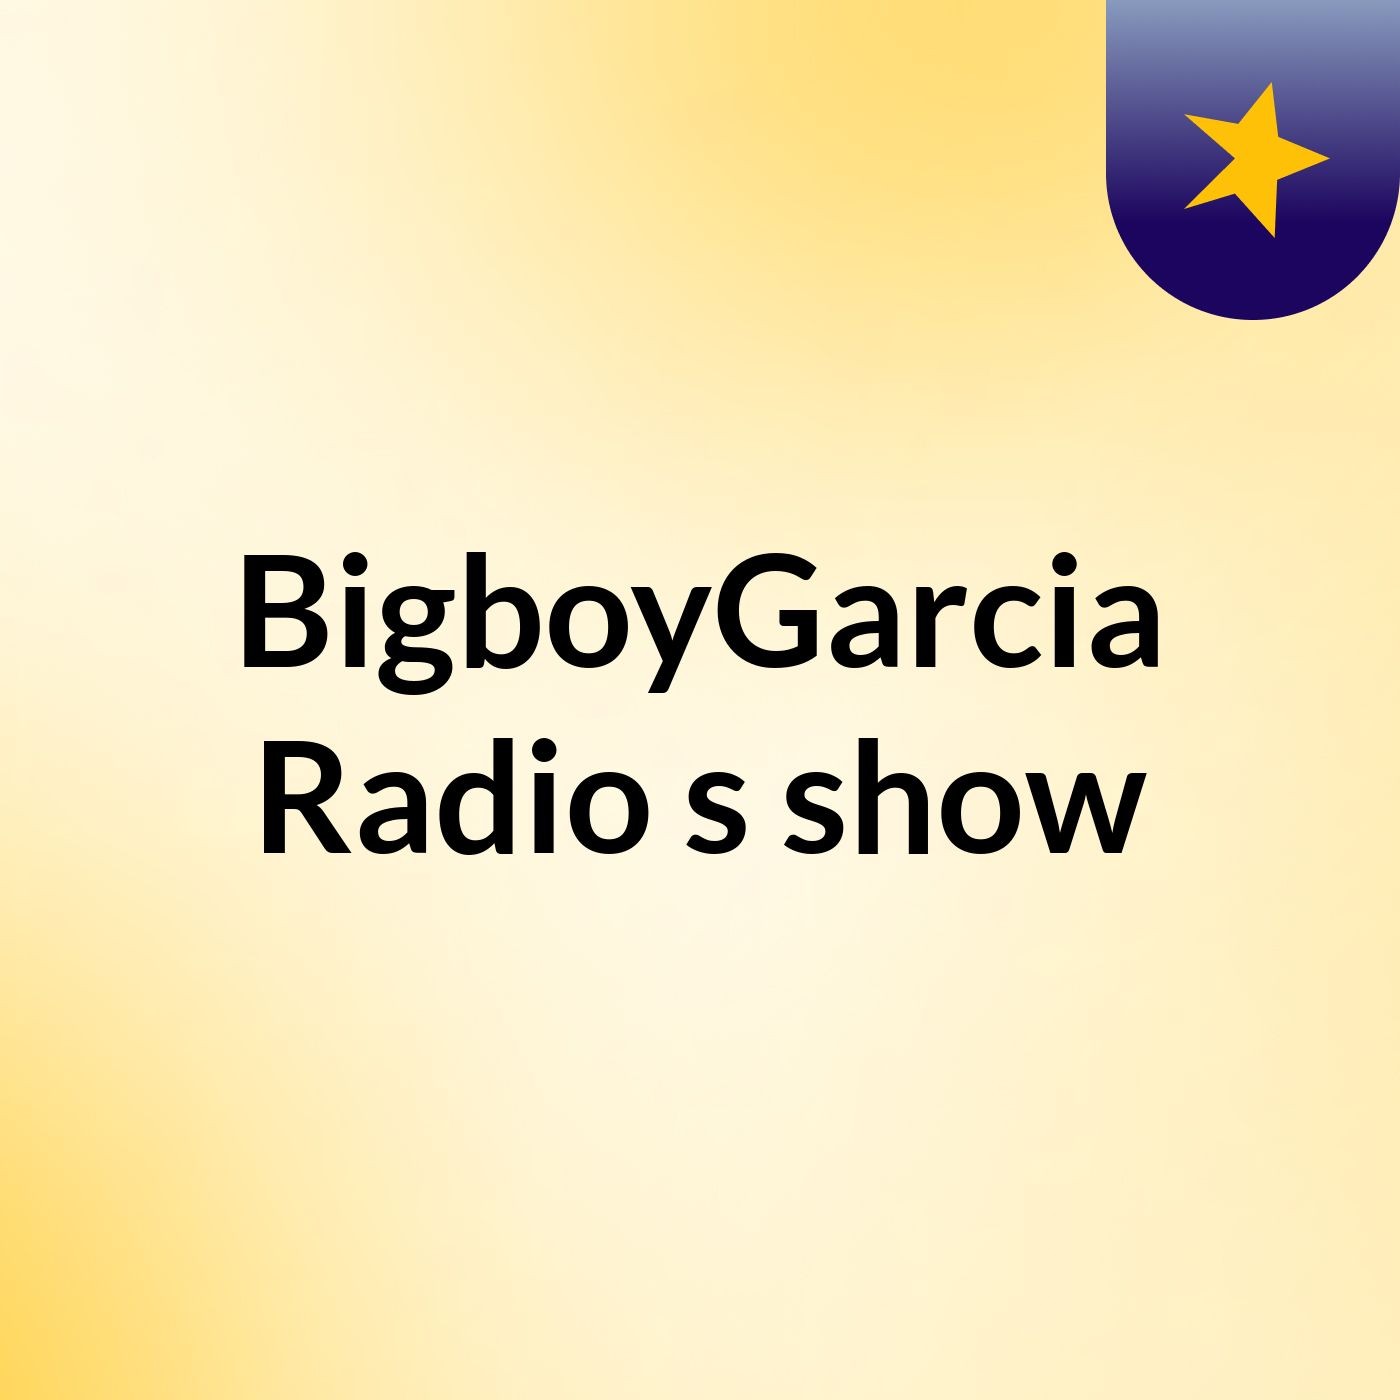 BigboyGarcia Radio's show